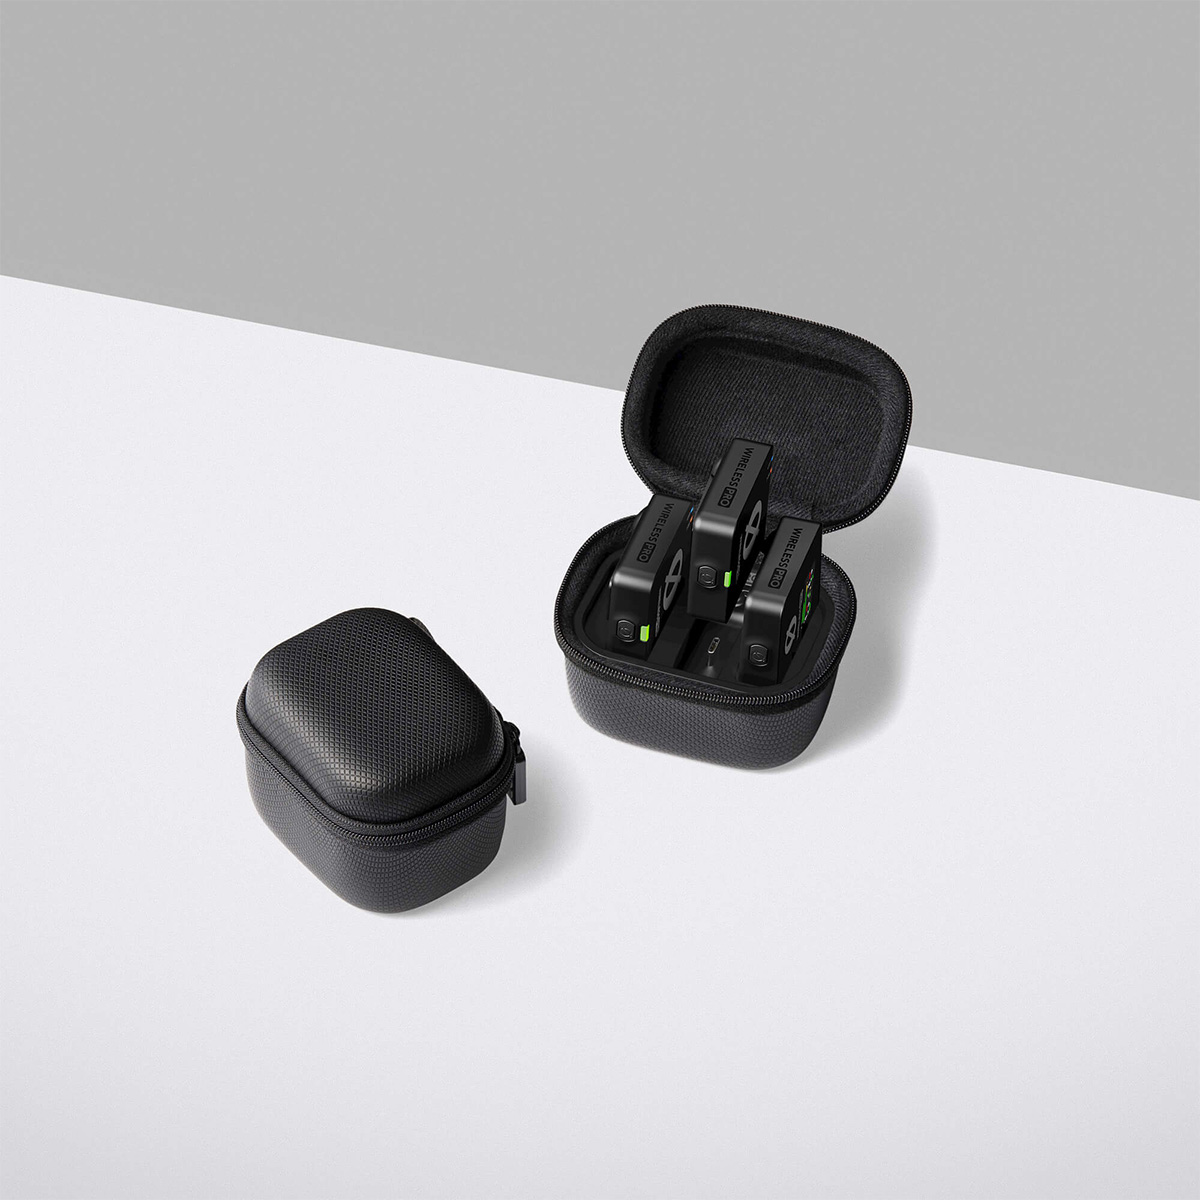 Receiver (RX) und Transmitter (TX) des Rode Wireless Pro Drahtloses Mikrofonsystem im Smart Charge Case  fotografiert